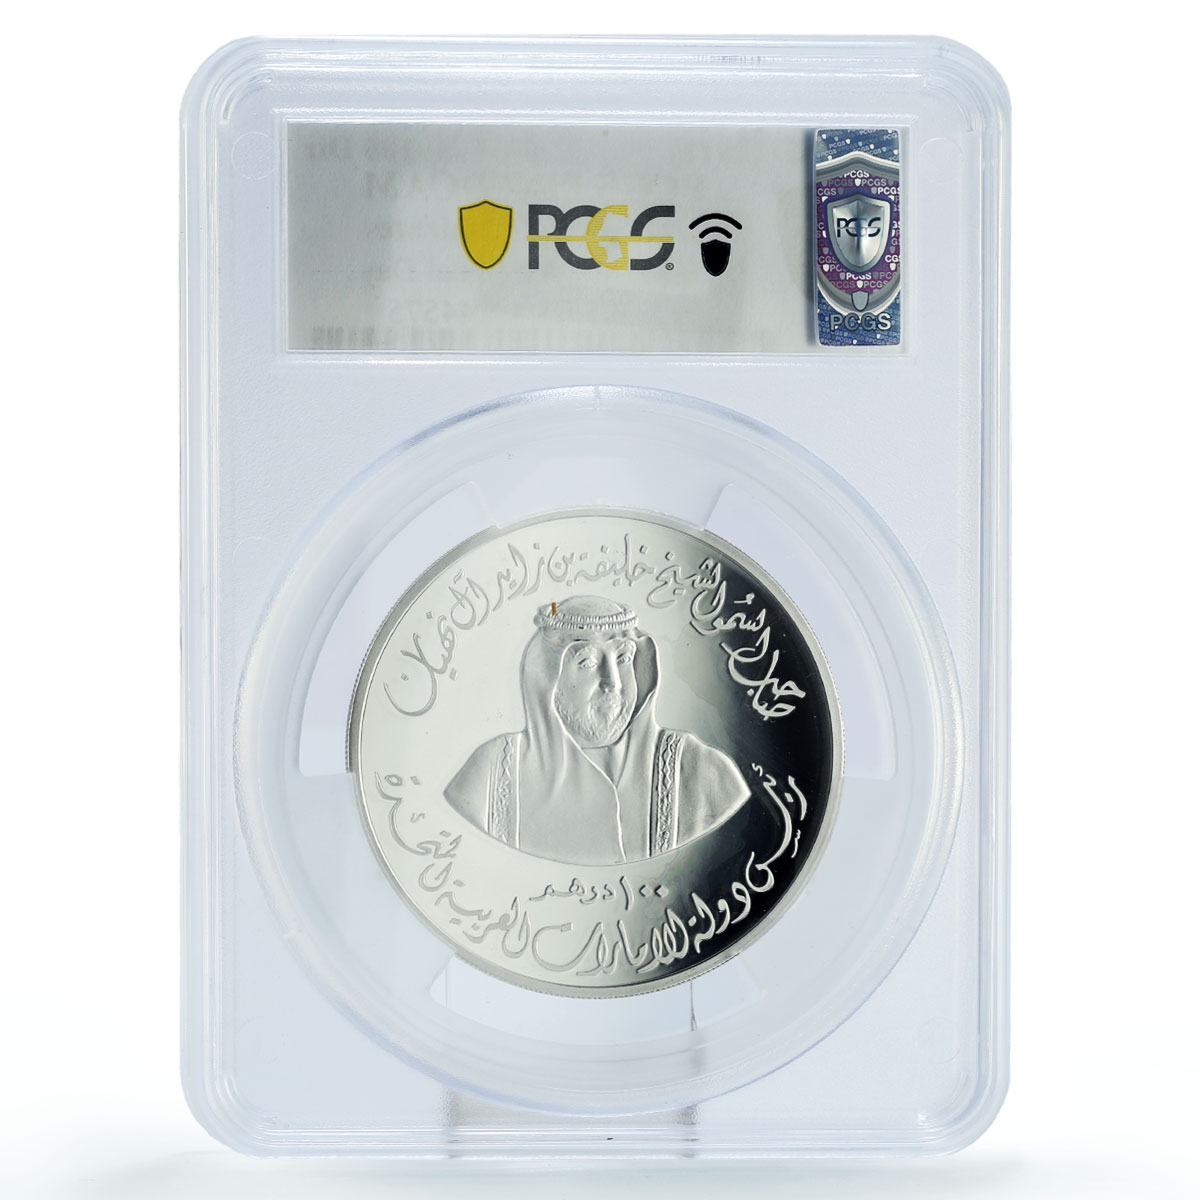 UAE 100 dirhams National Day Spirit Union Sheikhs PR69 PCGS silver coin 2011